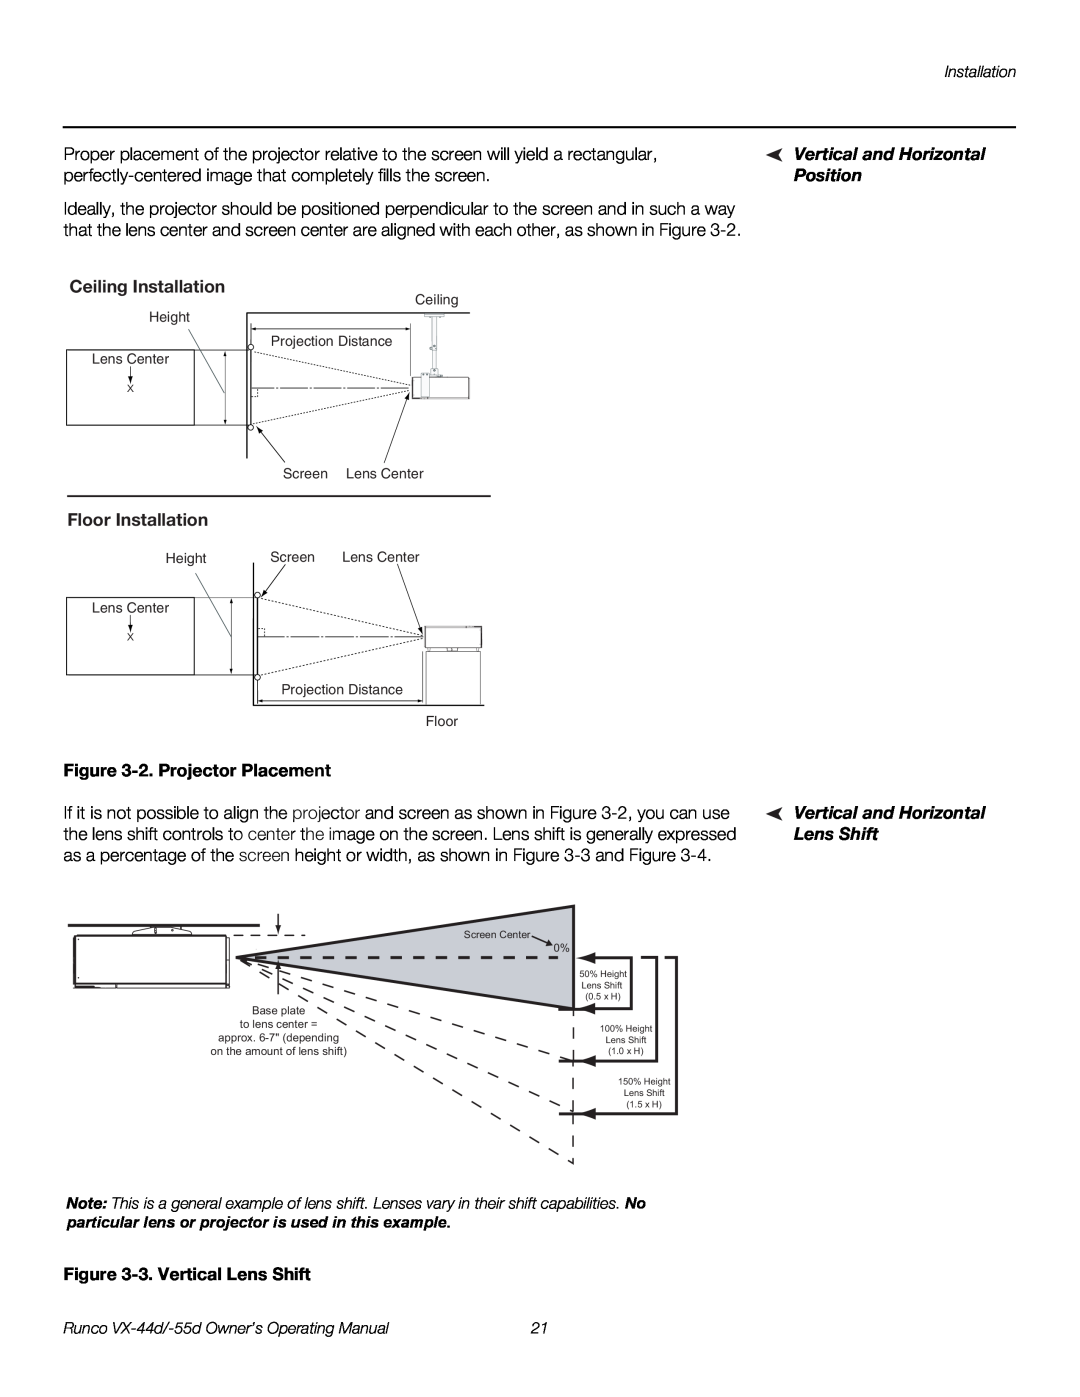 Runco 1080p manual Ceiling Installation, Floor Installation, 2. Projector Placement, 3. Vertical Lens Shift 